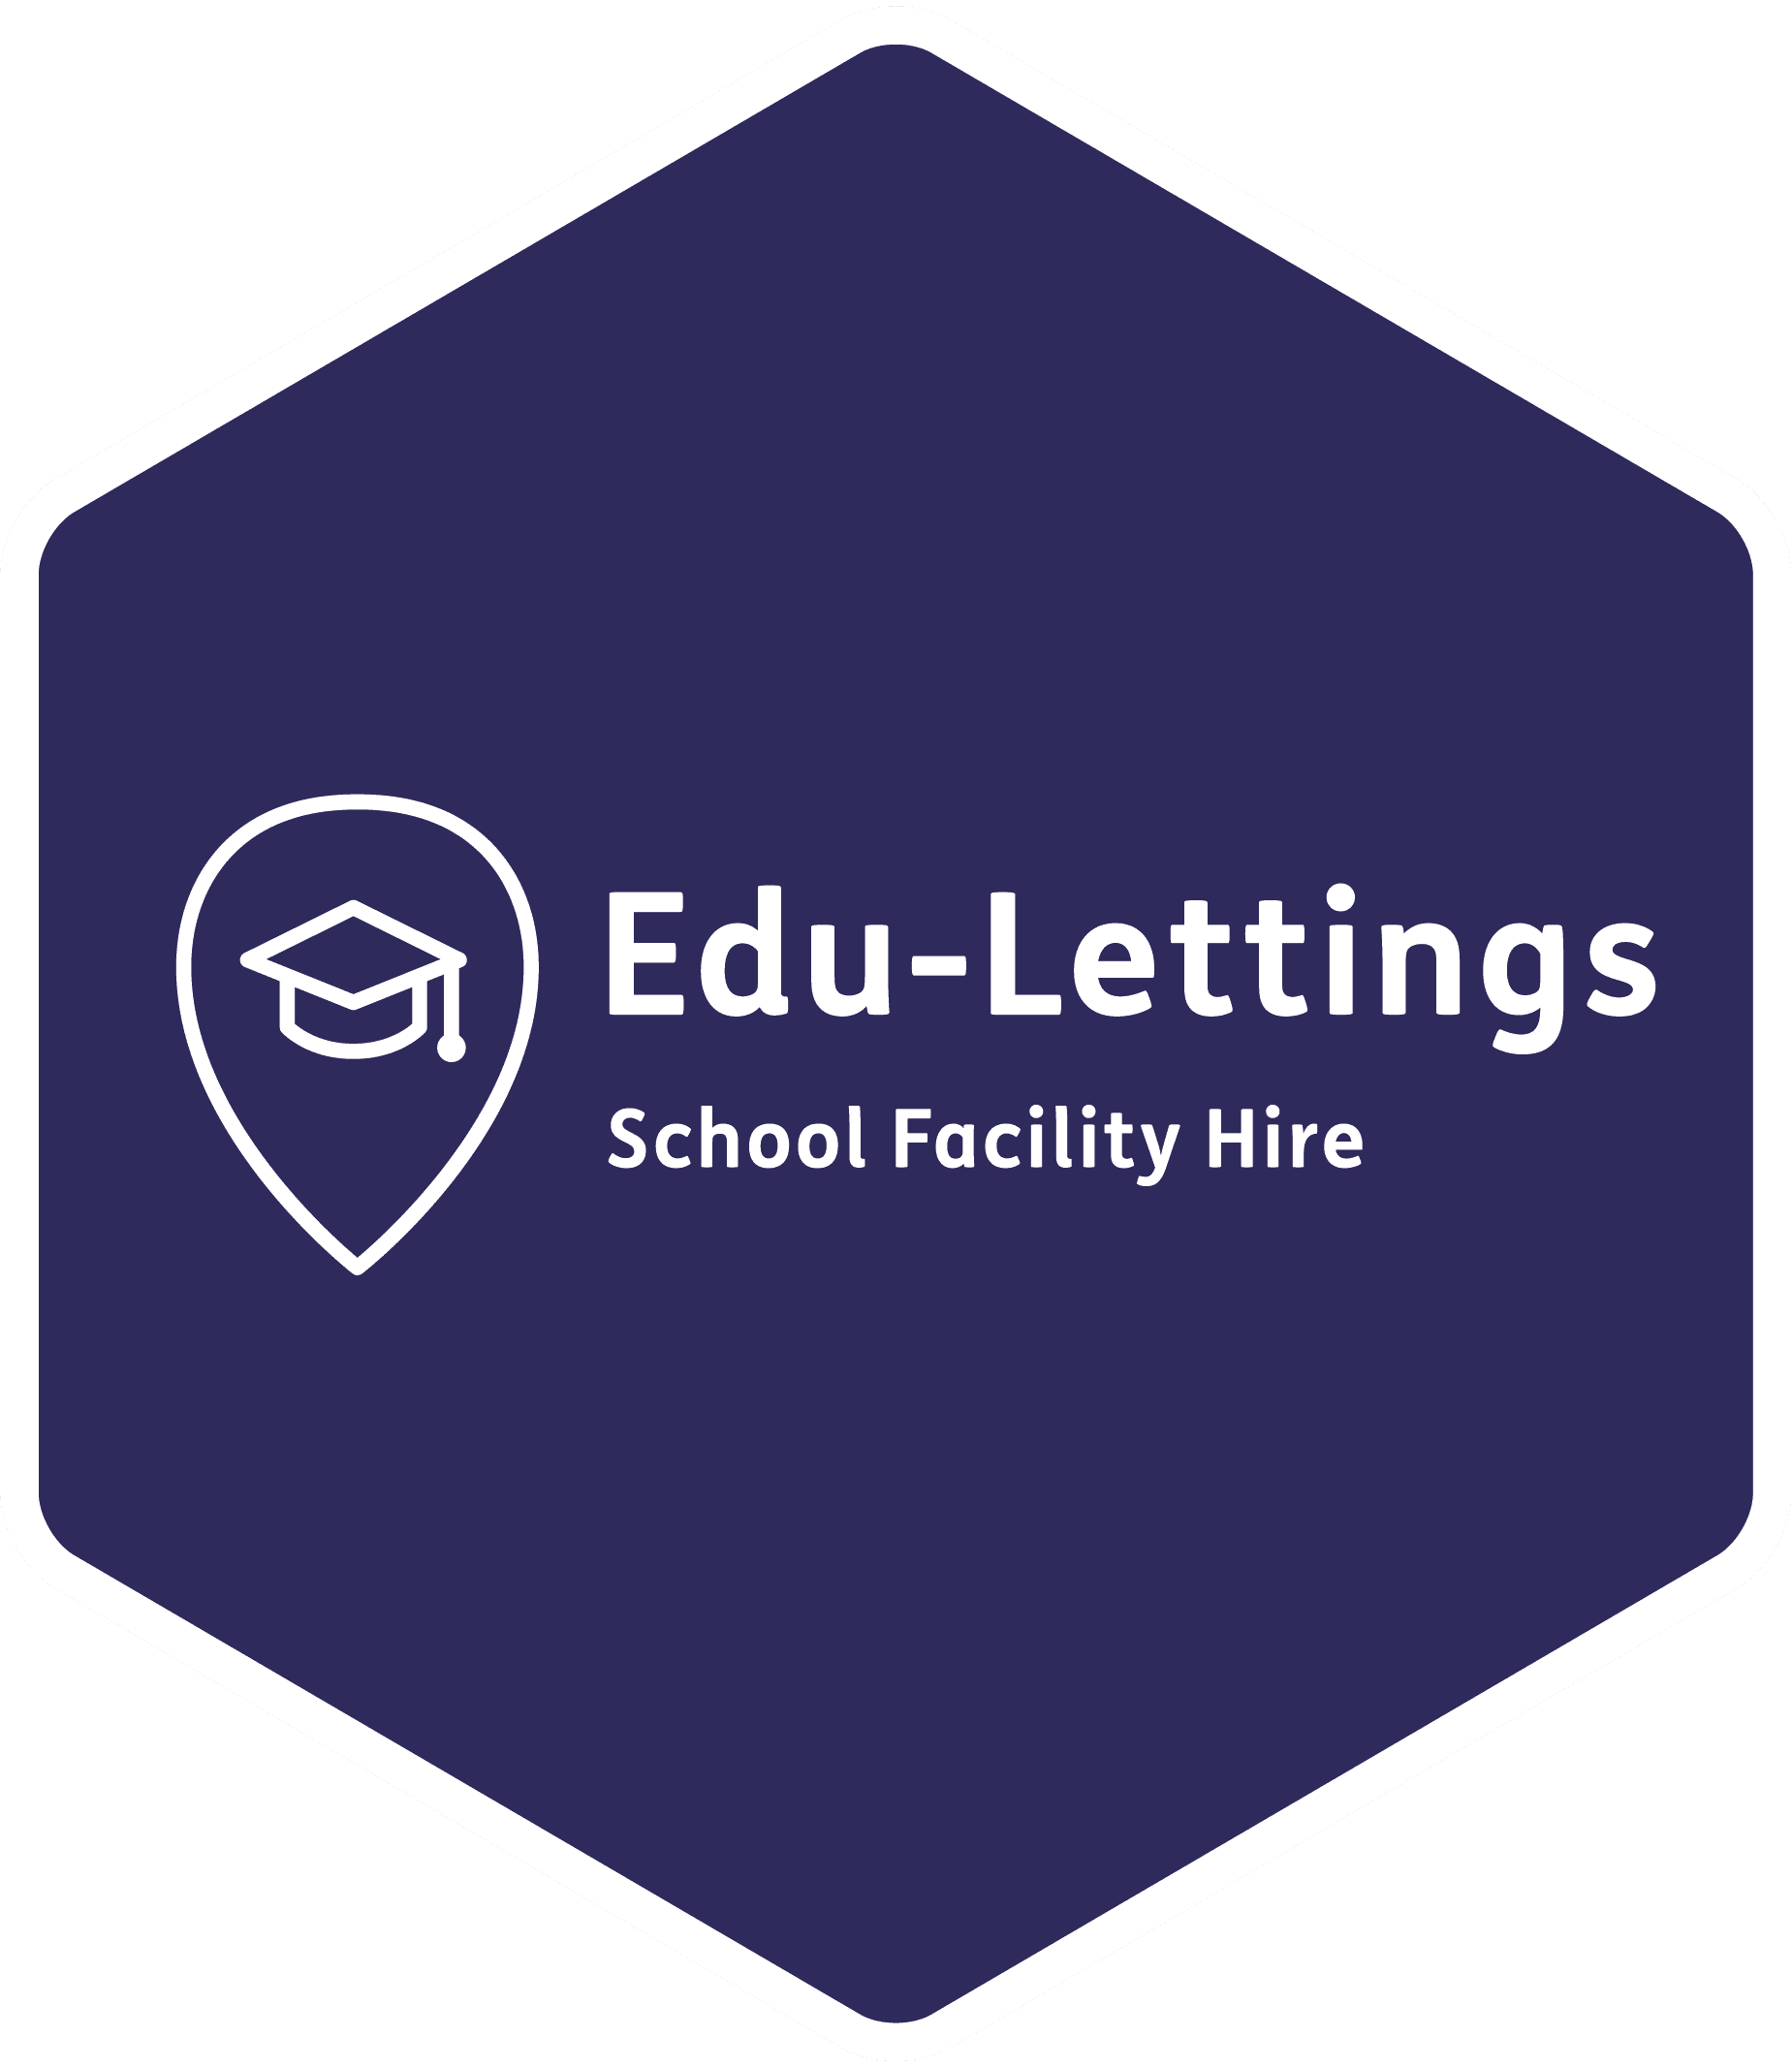 Edu-Lettings